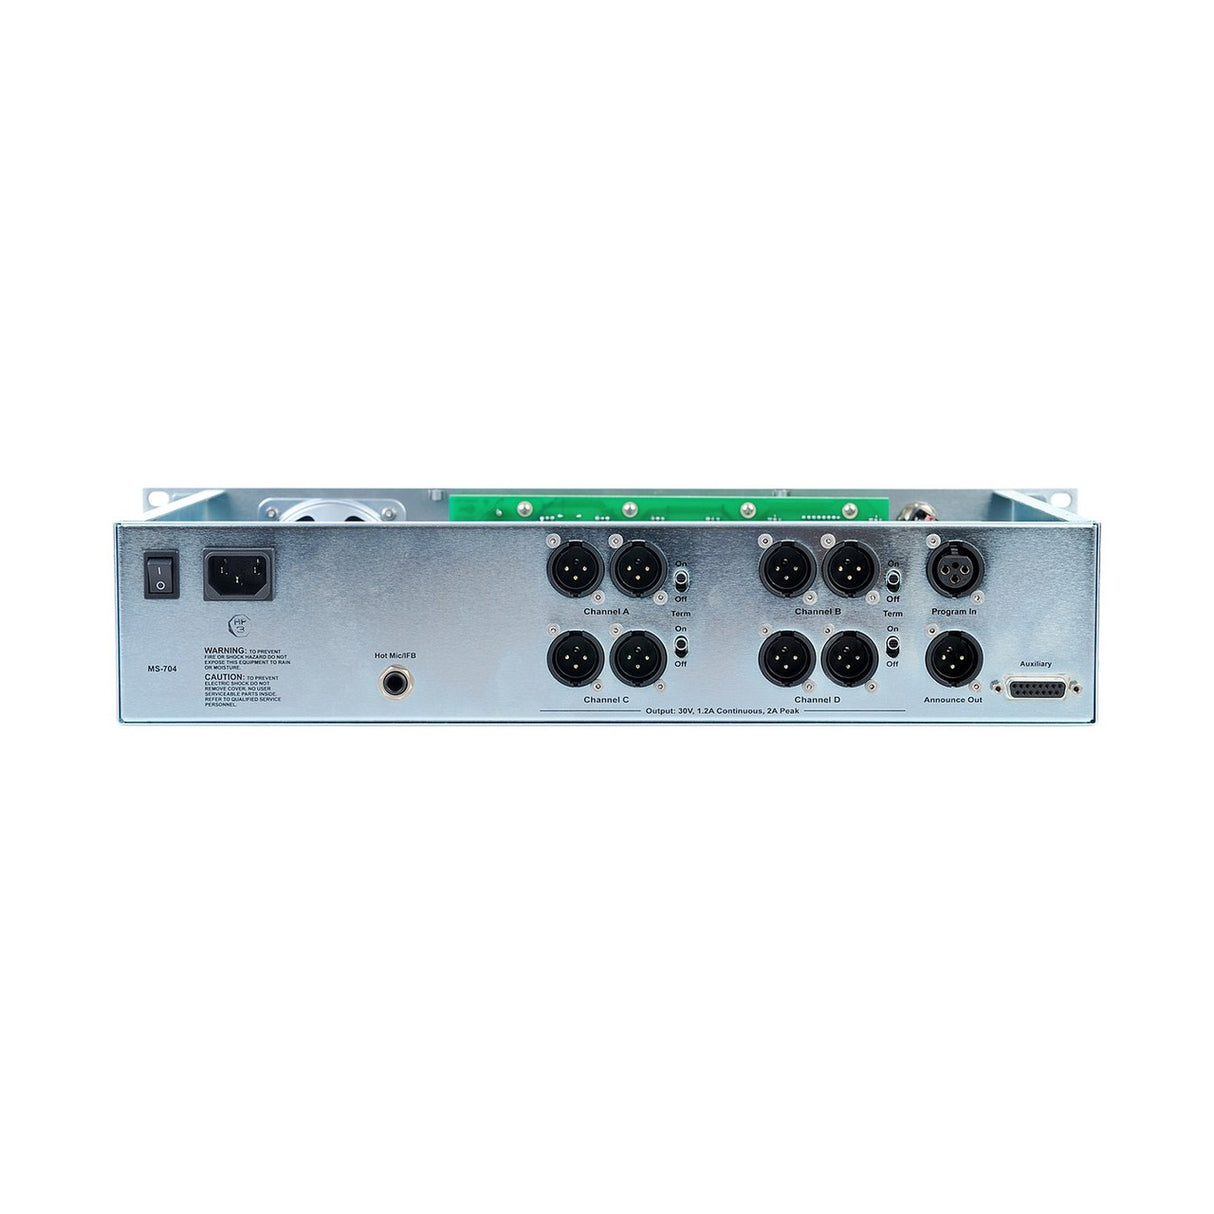 Clear-Com MS-704 | 4 Channel Headset Speaker Main Station Intercom